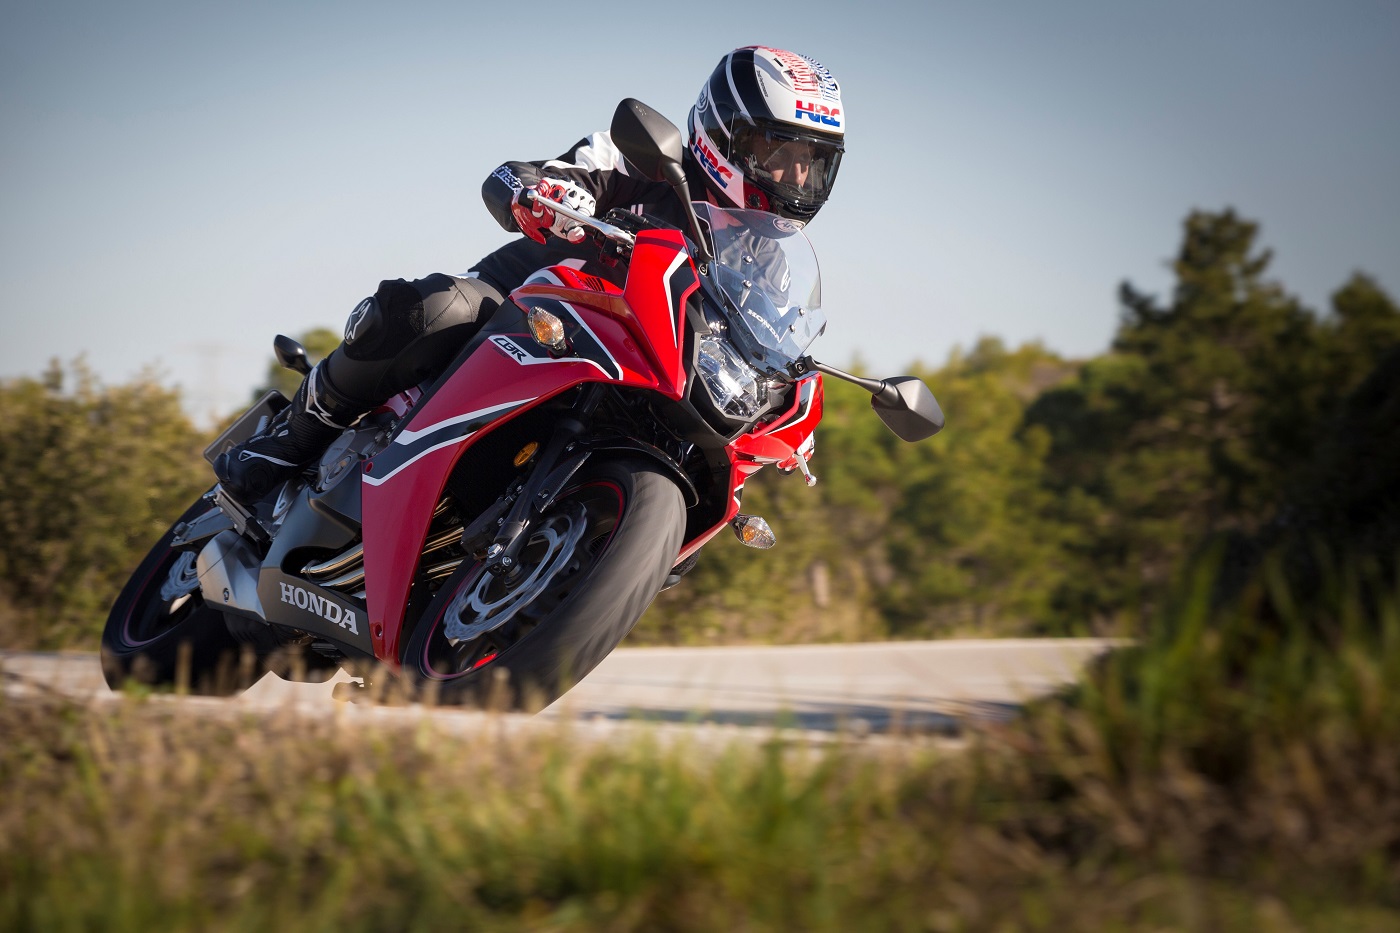 Bag €600 off selected Honda Motorcycles now!